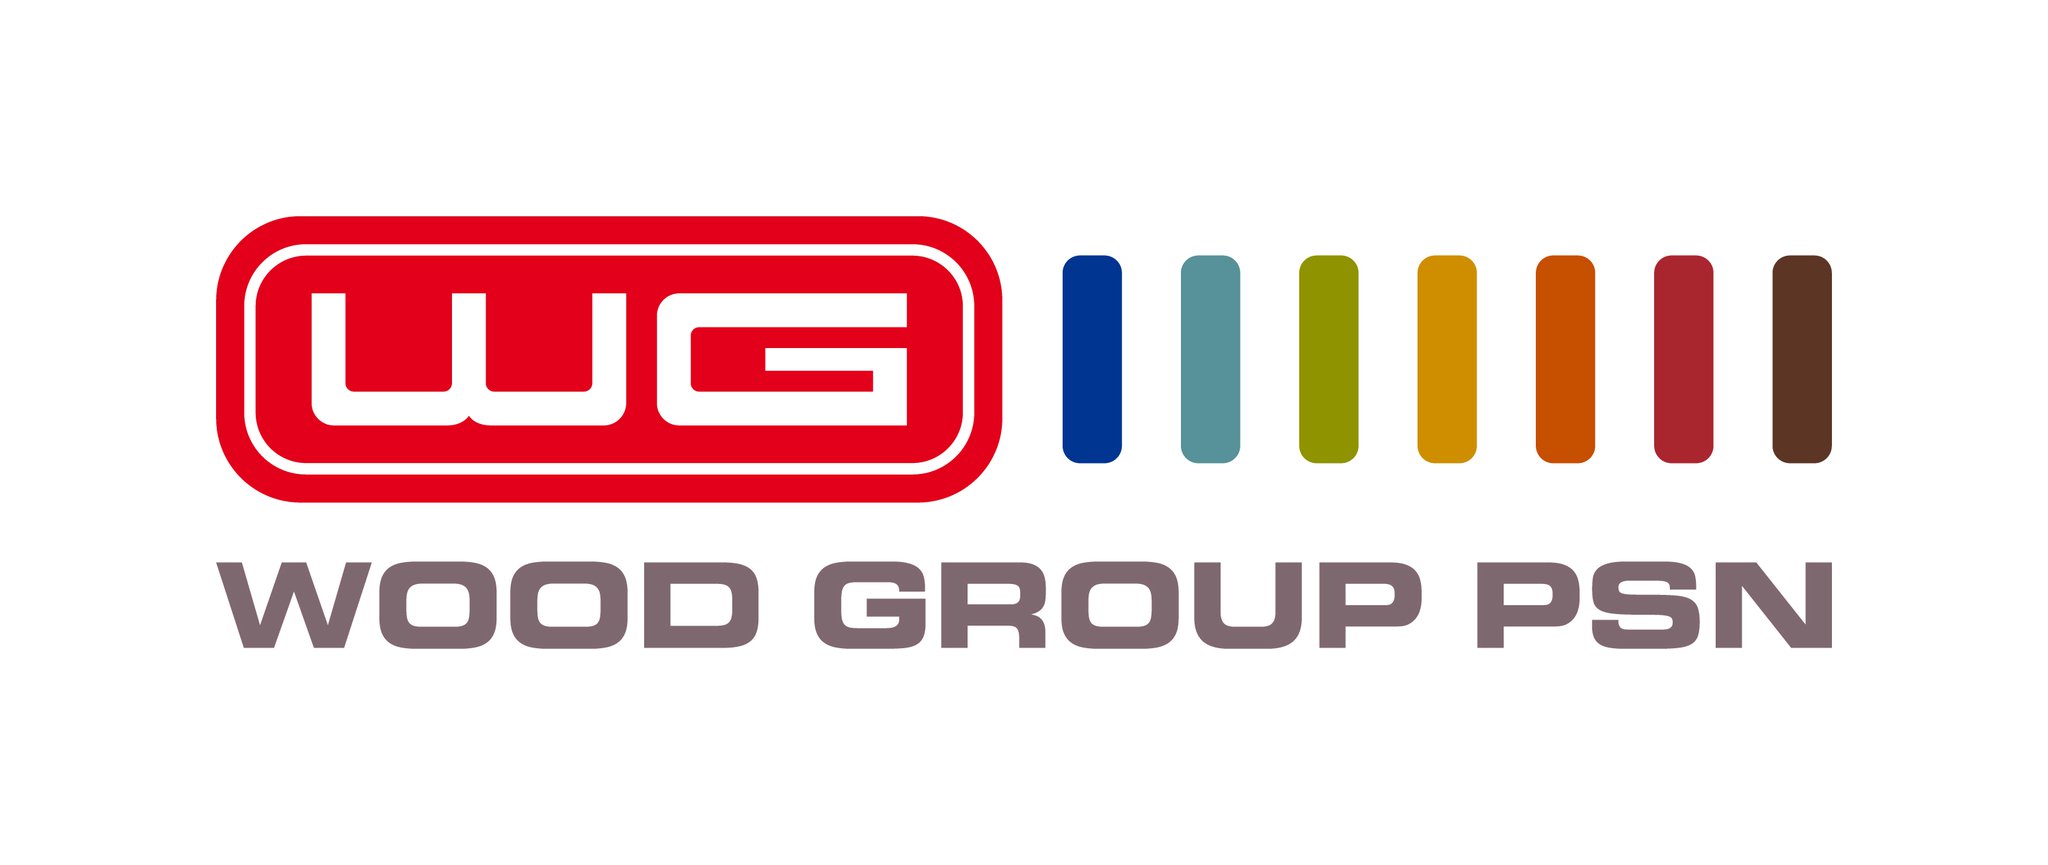 Wood Group PSN logo